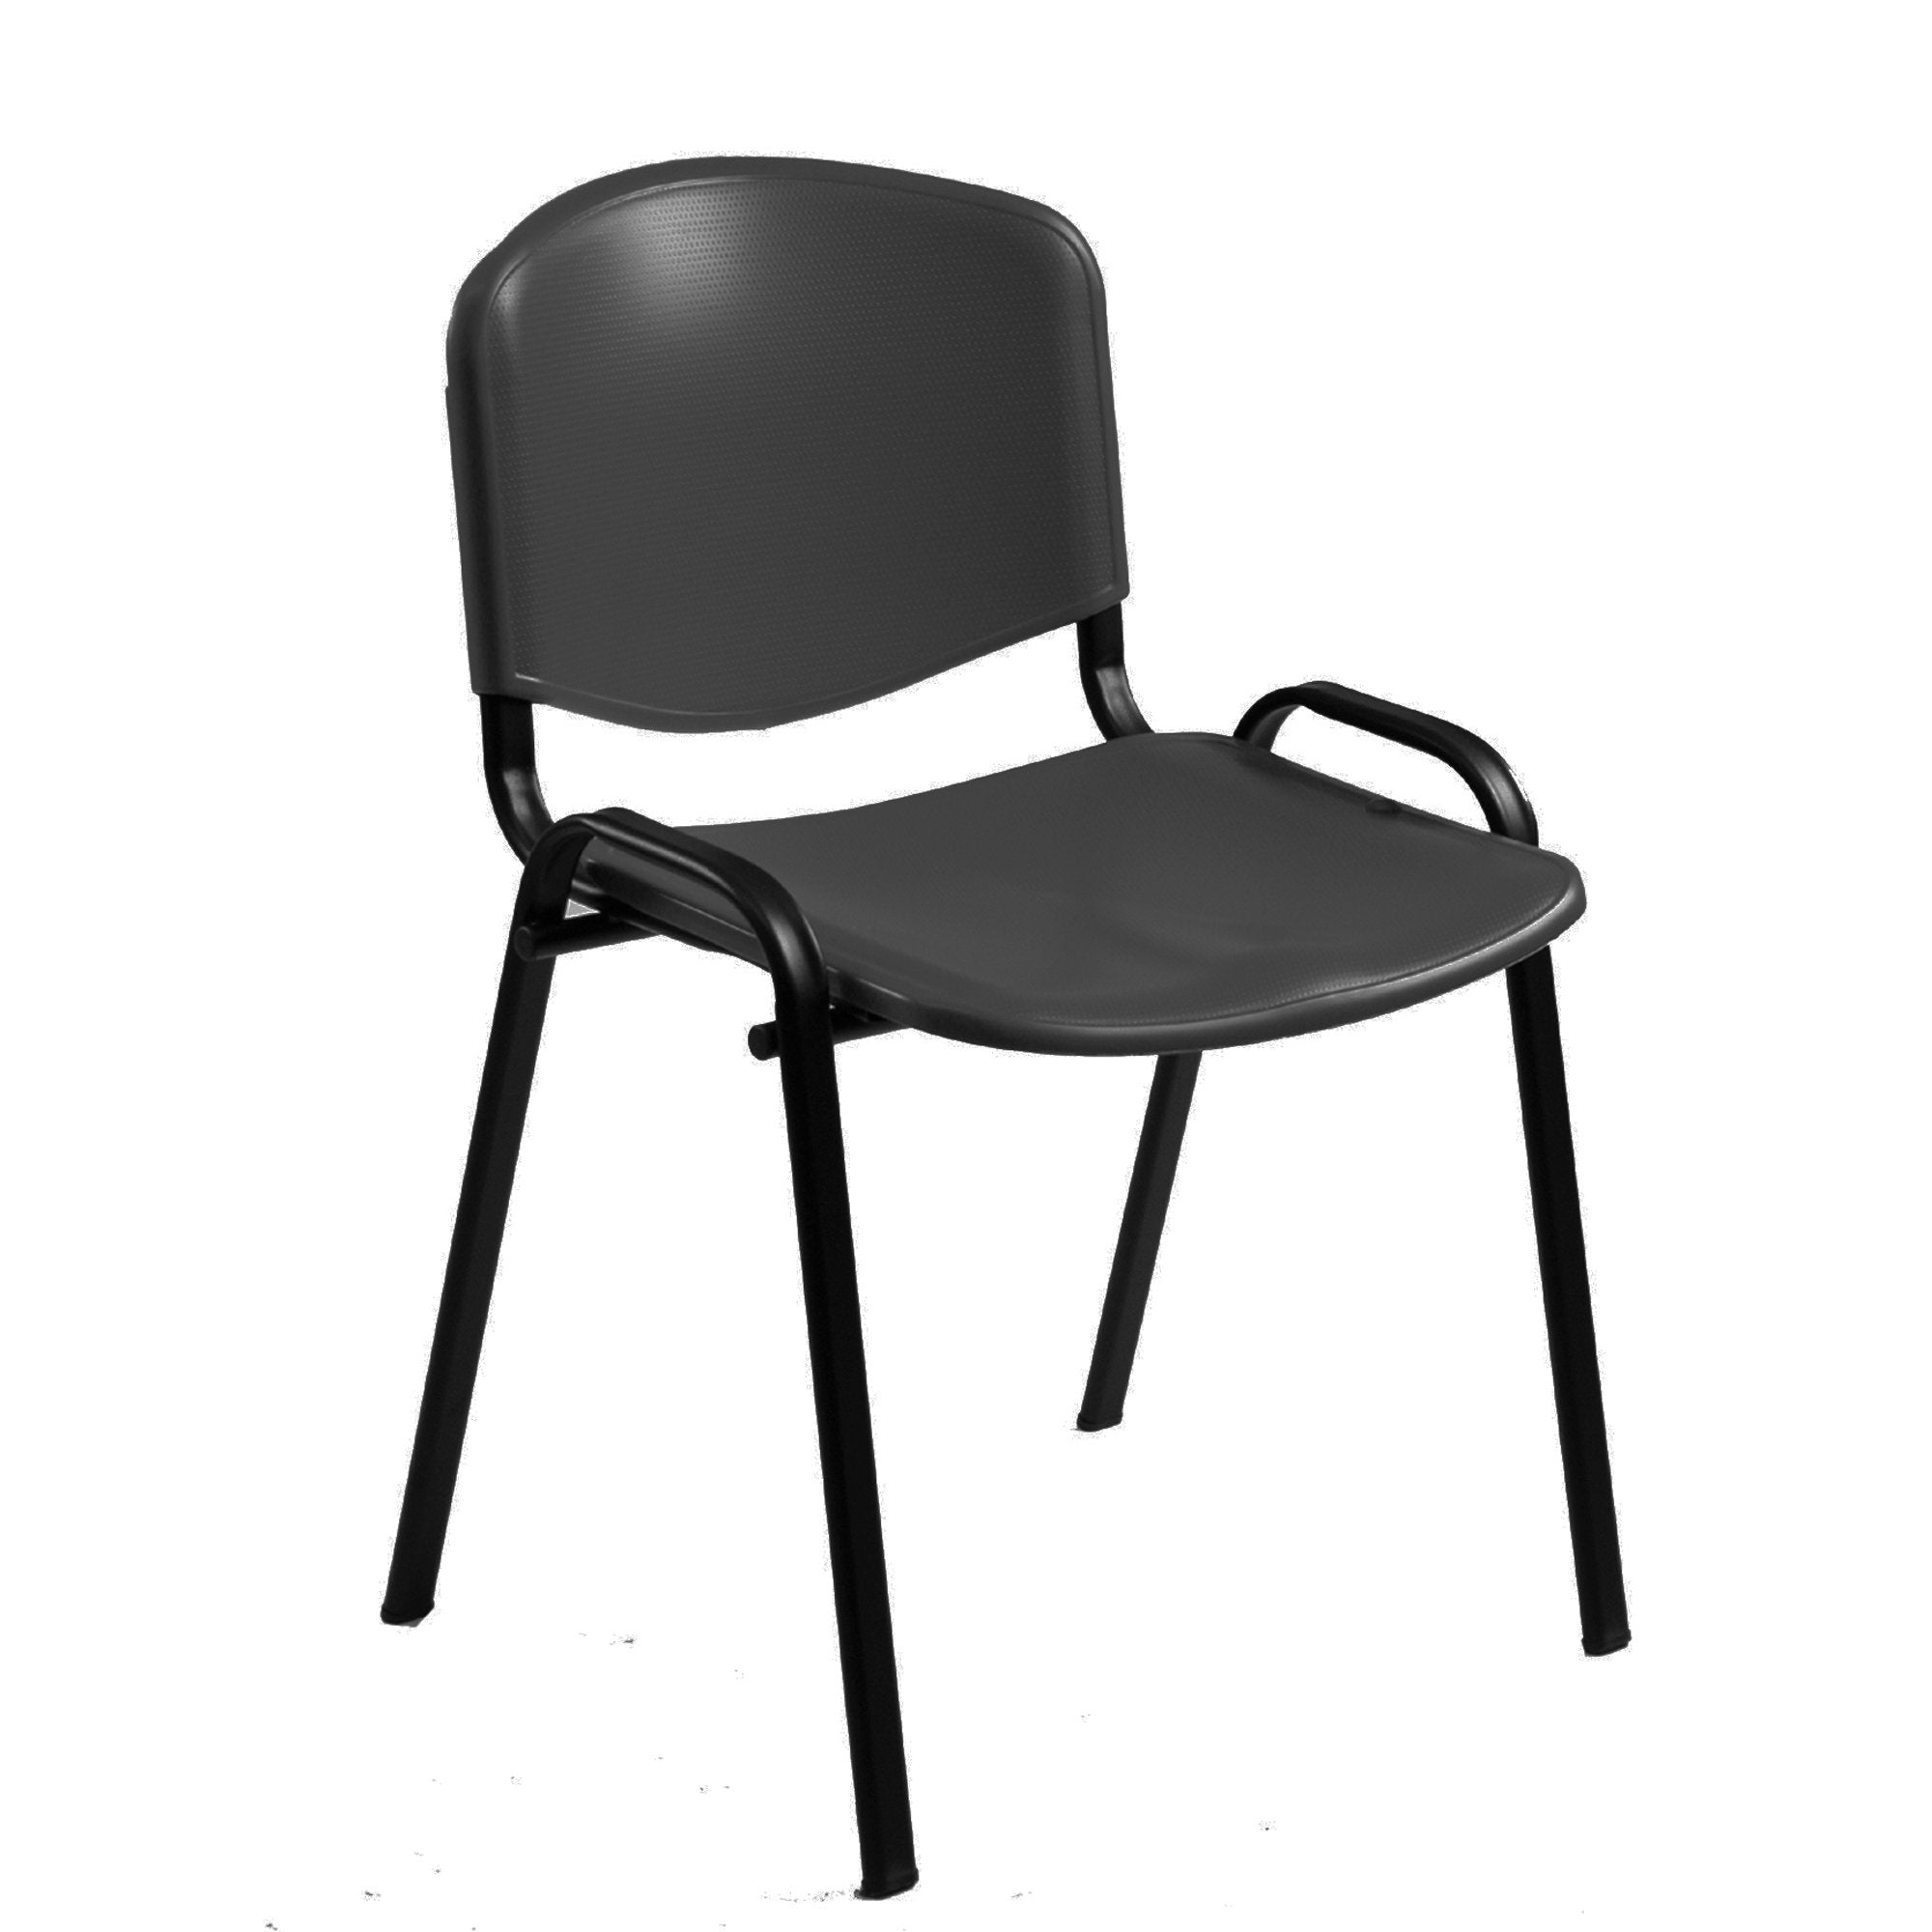 unisit-sedia-attesa-dado-d5sp-nero-senza-braccioli